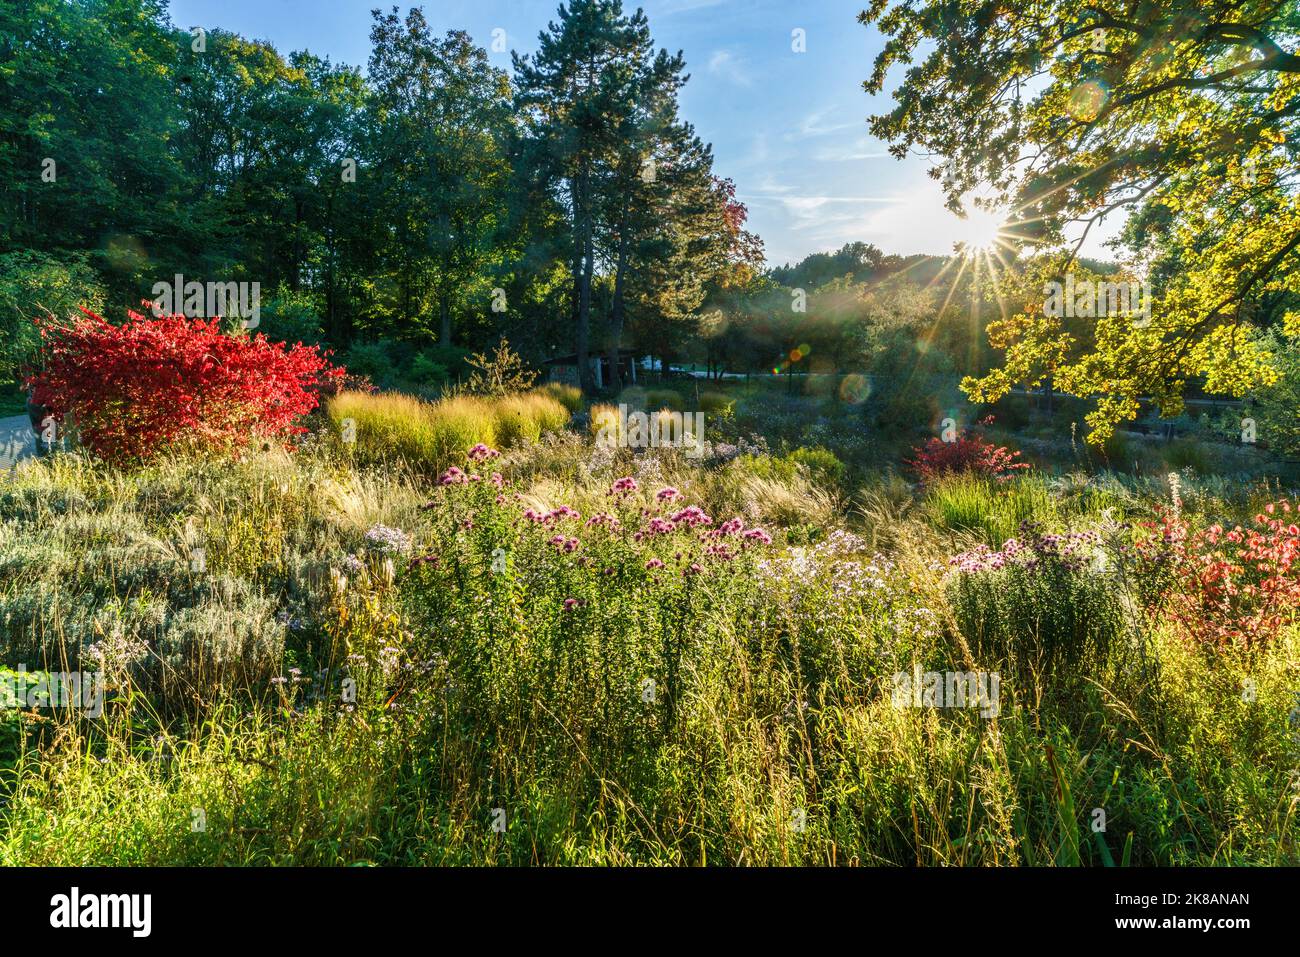 Tiergarten im Herbst, Herbstfarben, rot verfärbte Blätter, Berlino, Germania Foto Stock